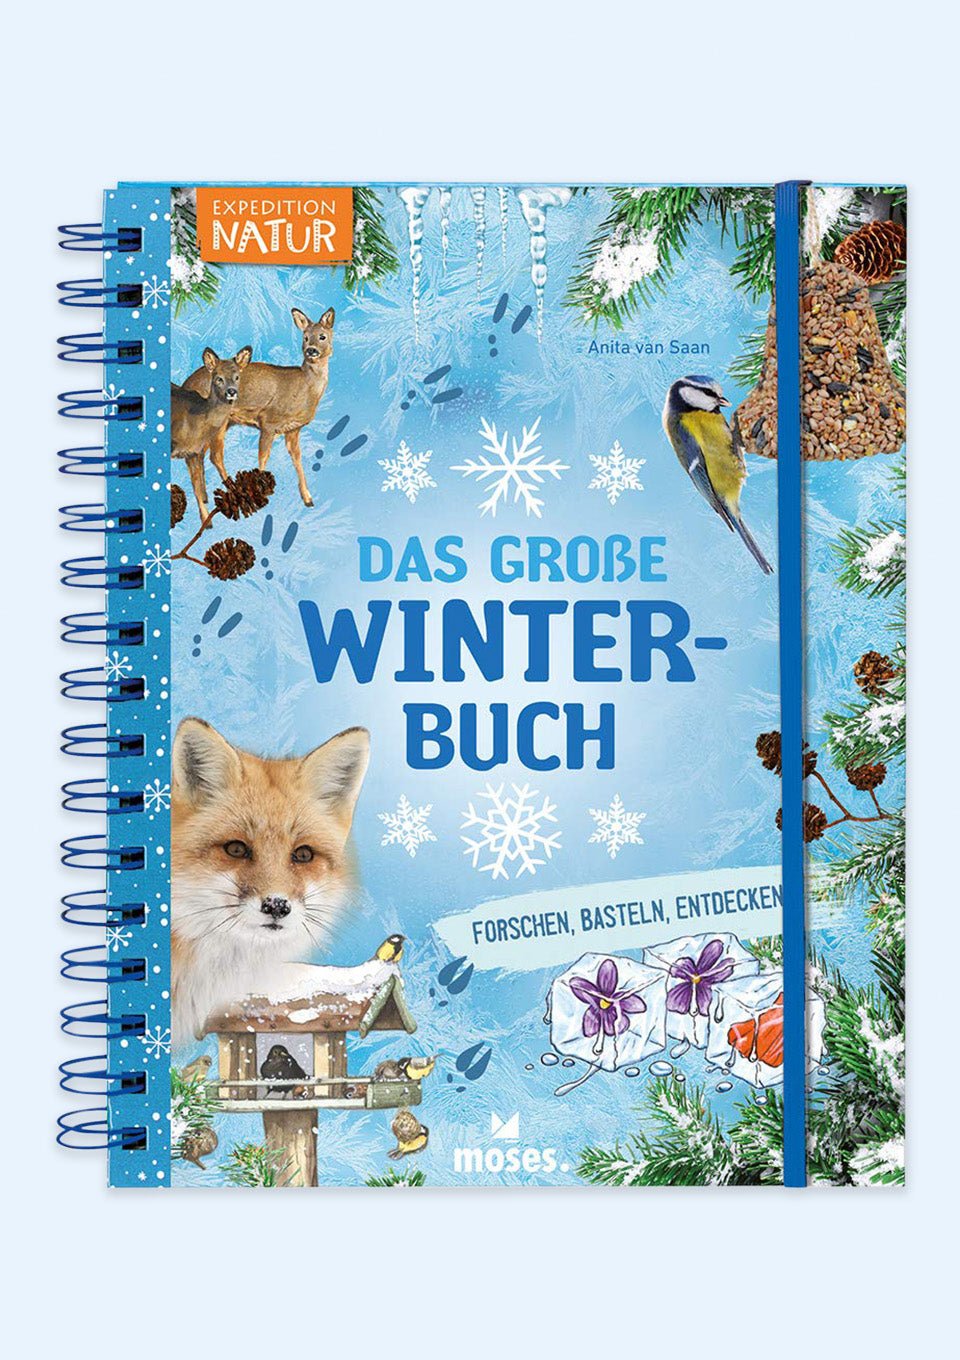 moses. Kinderbuch "Expedition Natur: Das große Winterbuch" - tiny-boon.com